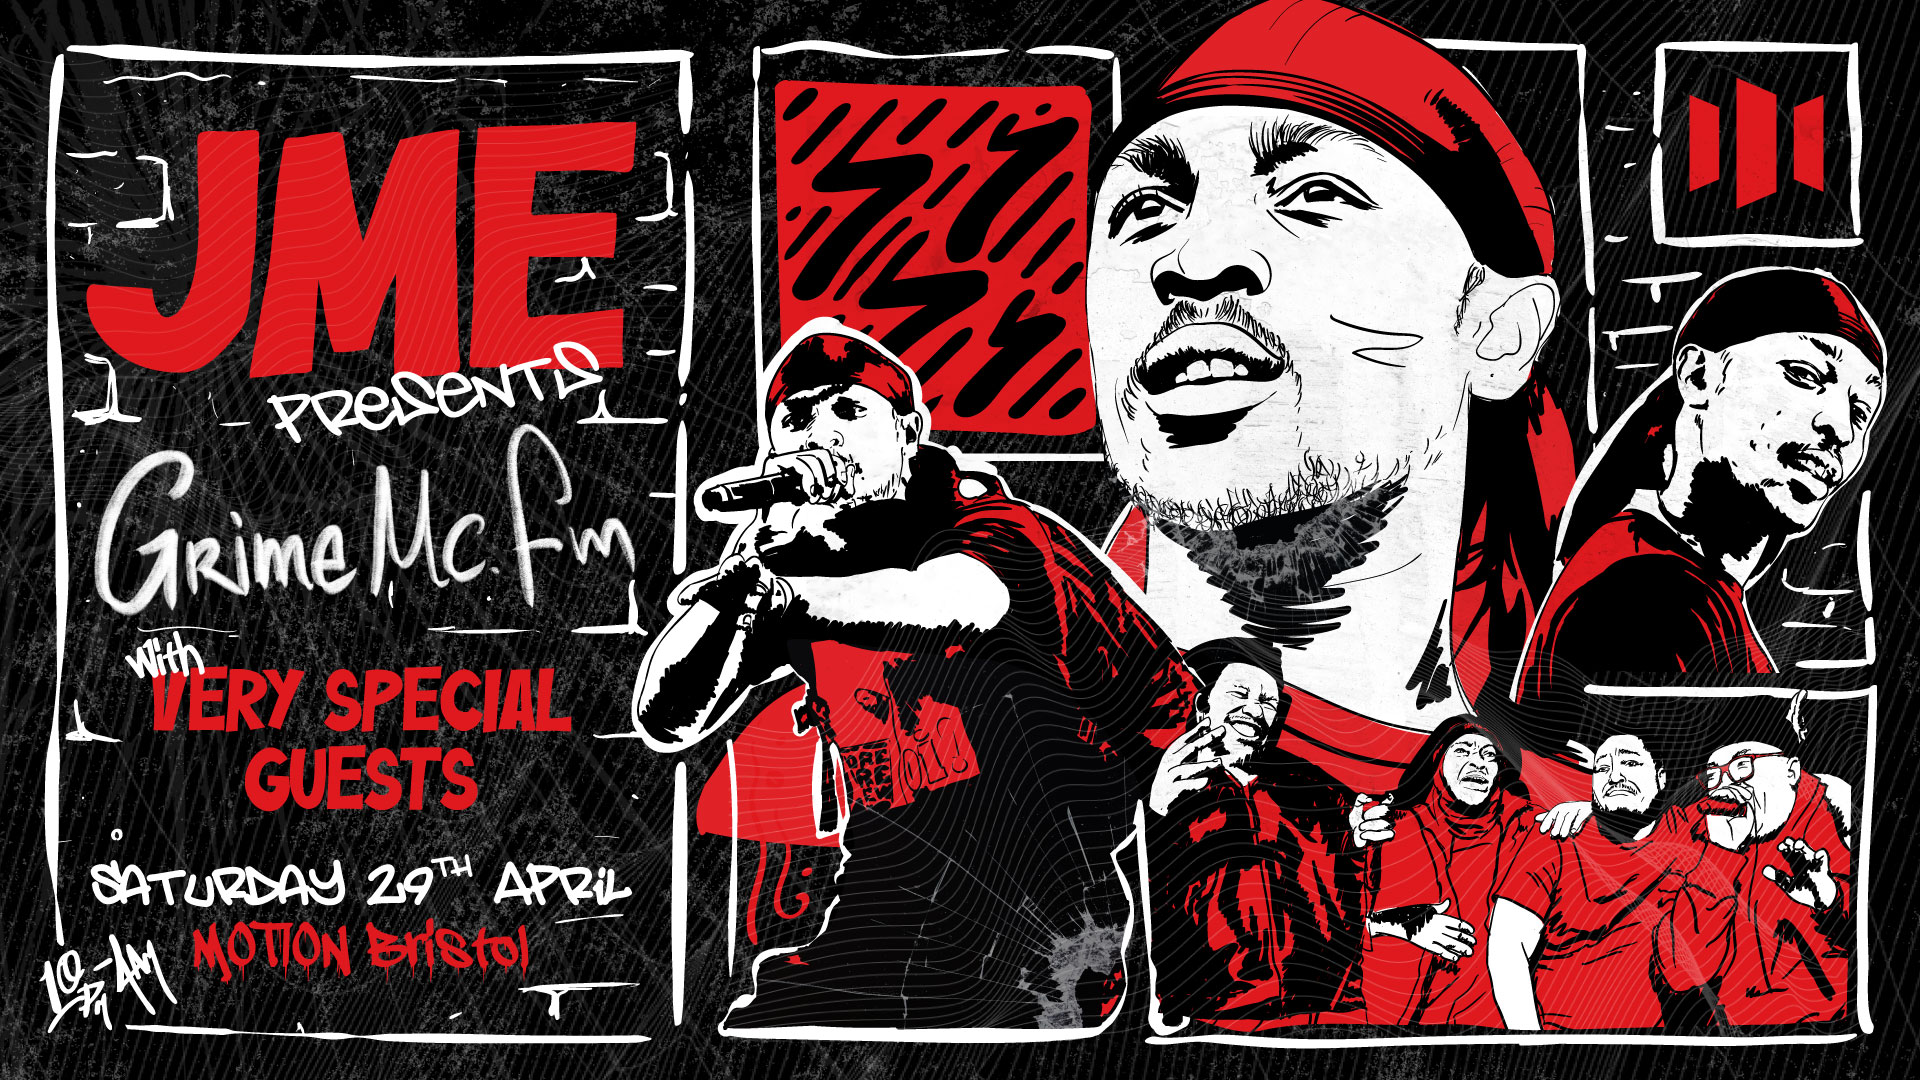 JME Presents Grime MC FM